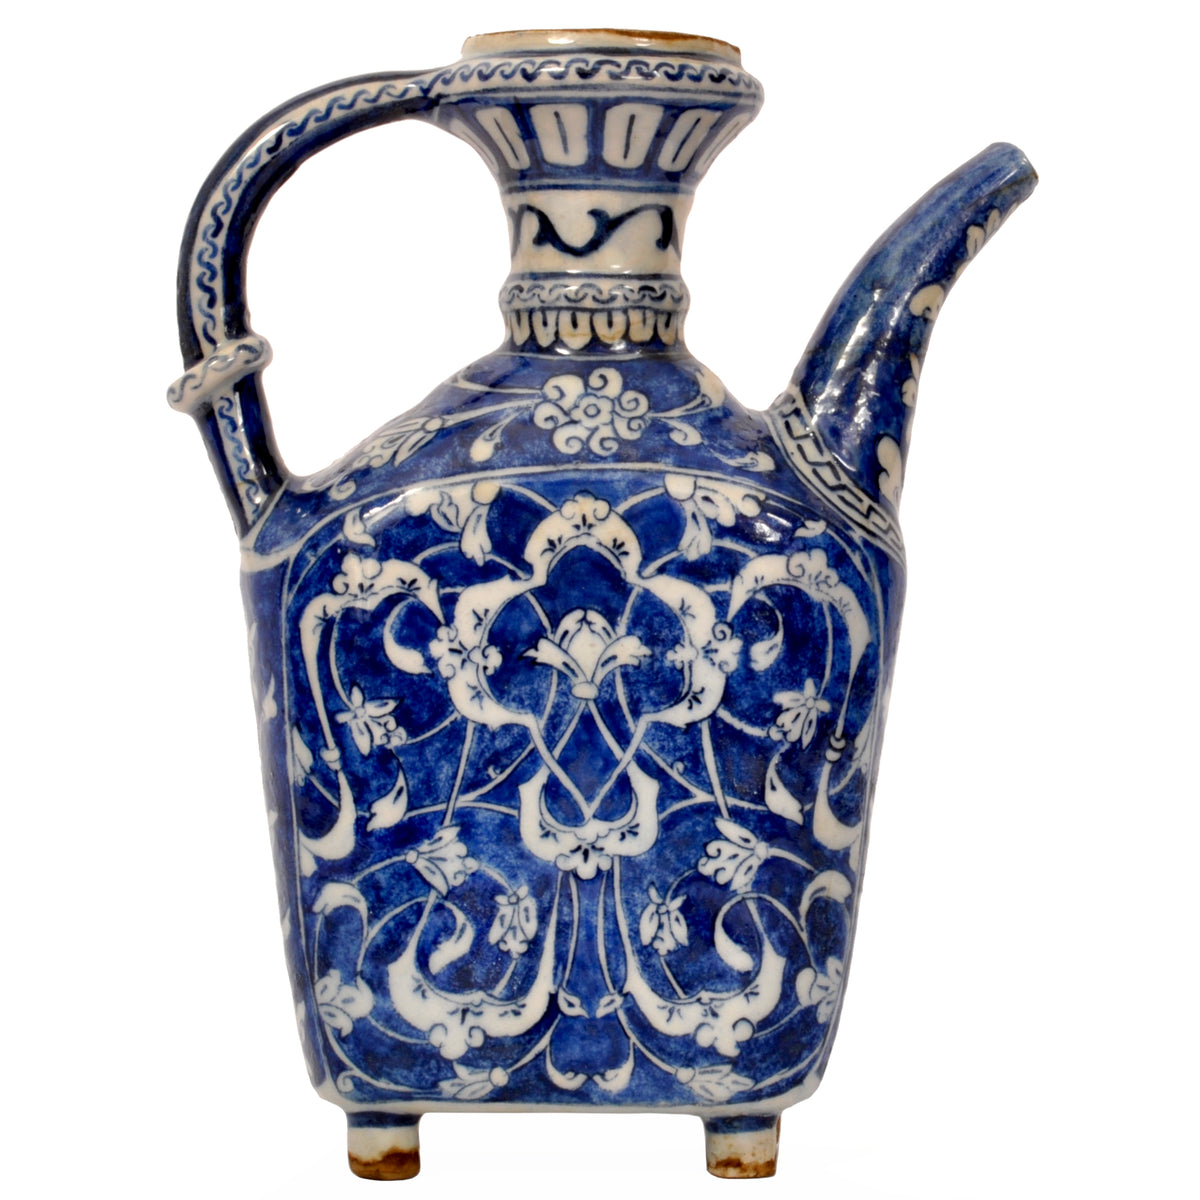 Antique Ottoman Islamic Blue & White Iznik Pottery Water Jug / Ewer, Turkey, circa 1650